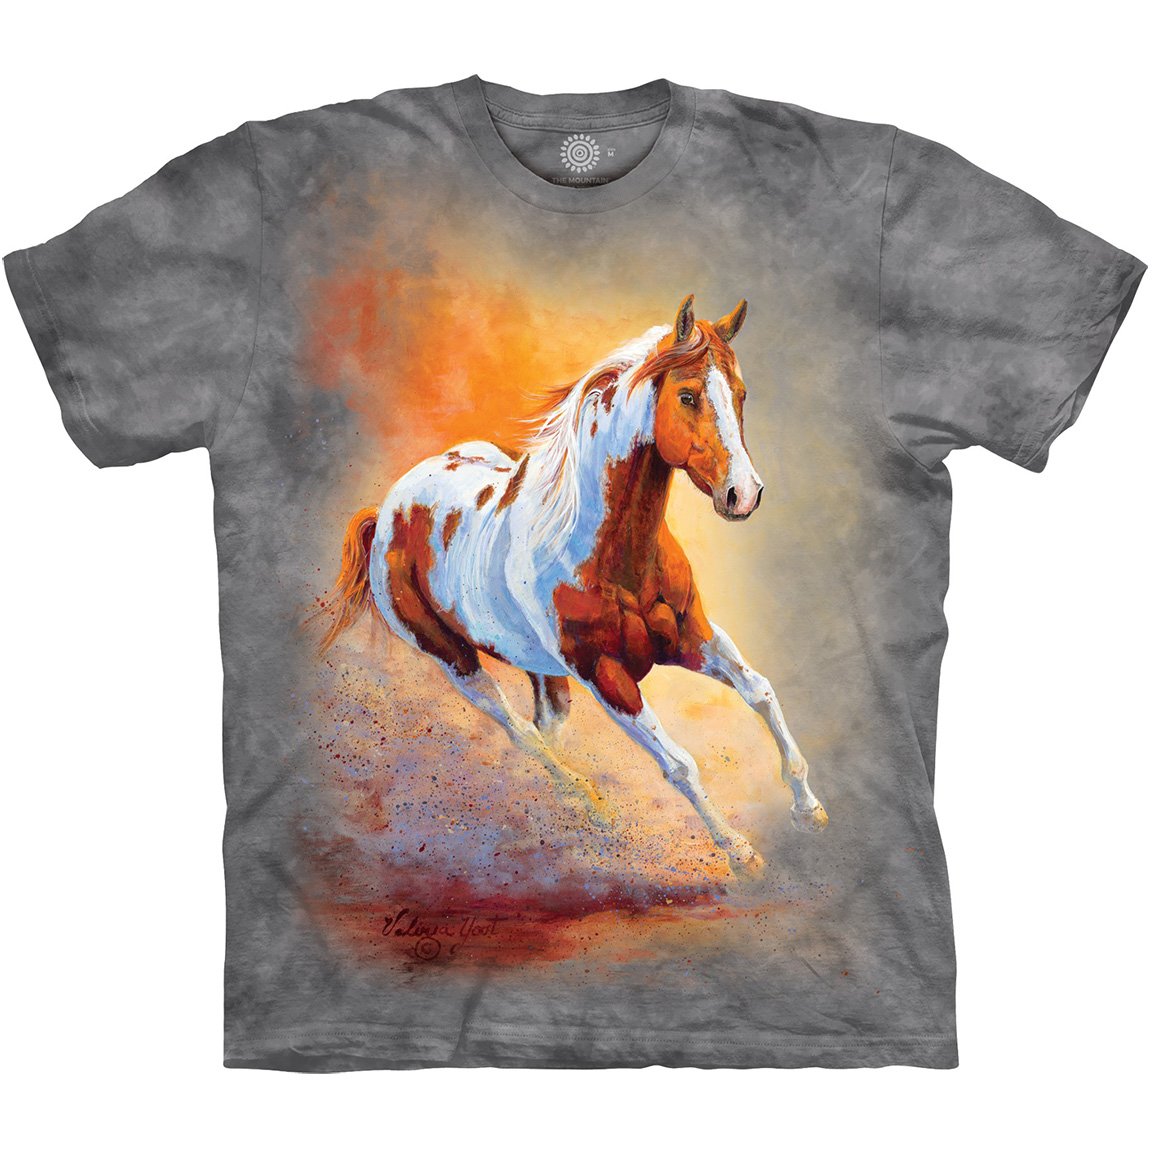 The Mountain Sunset Gallop - T-Shirt